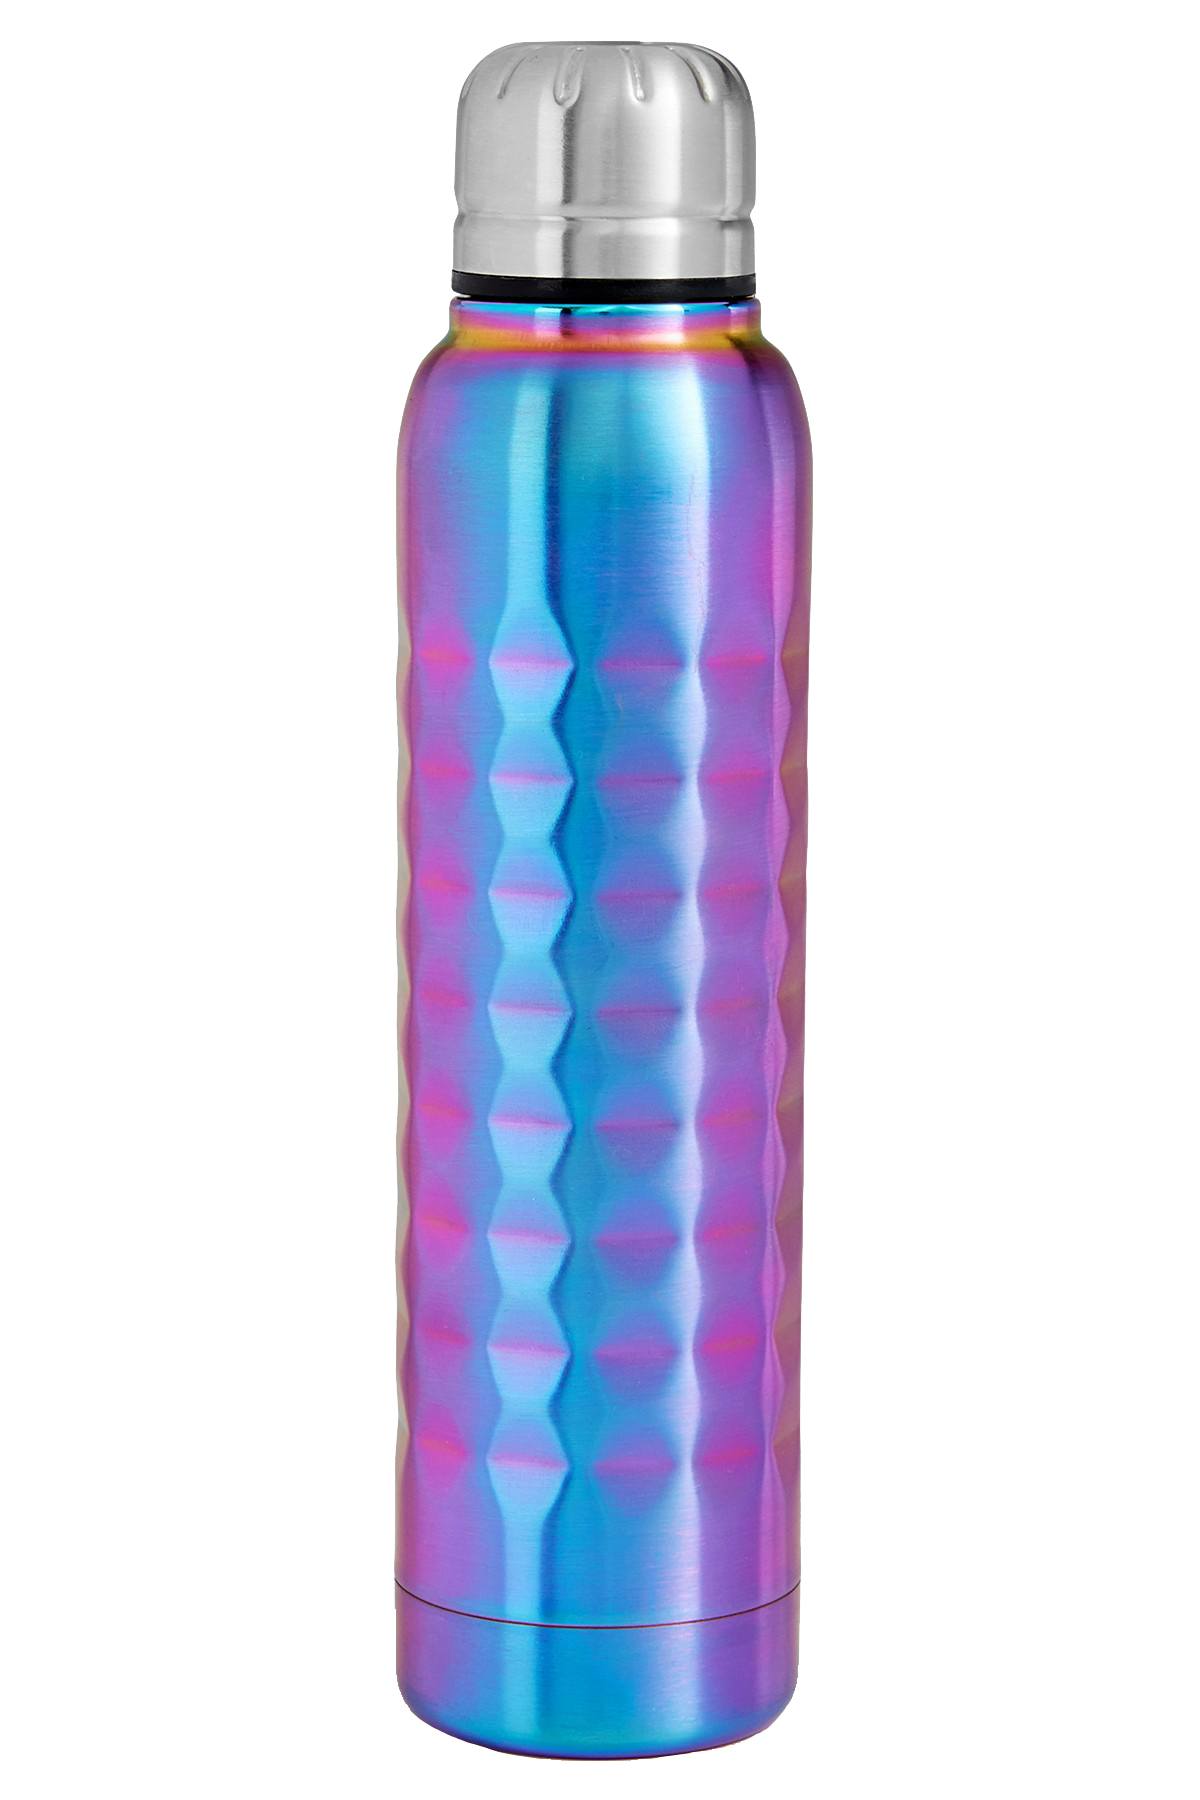 Celebrate Shop Iridescent-Purple Stainless Steel Water Bottle